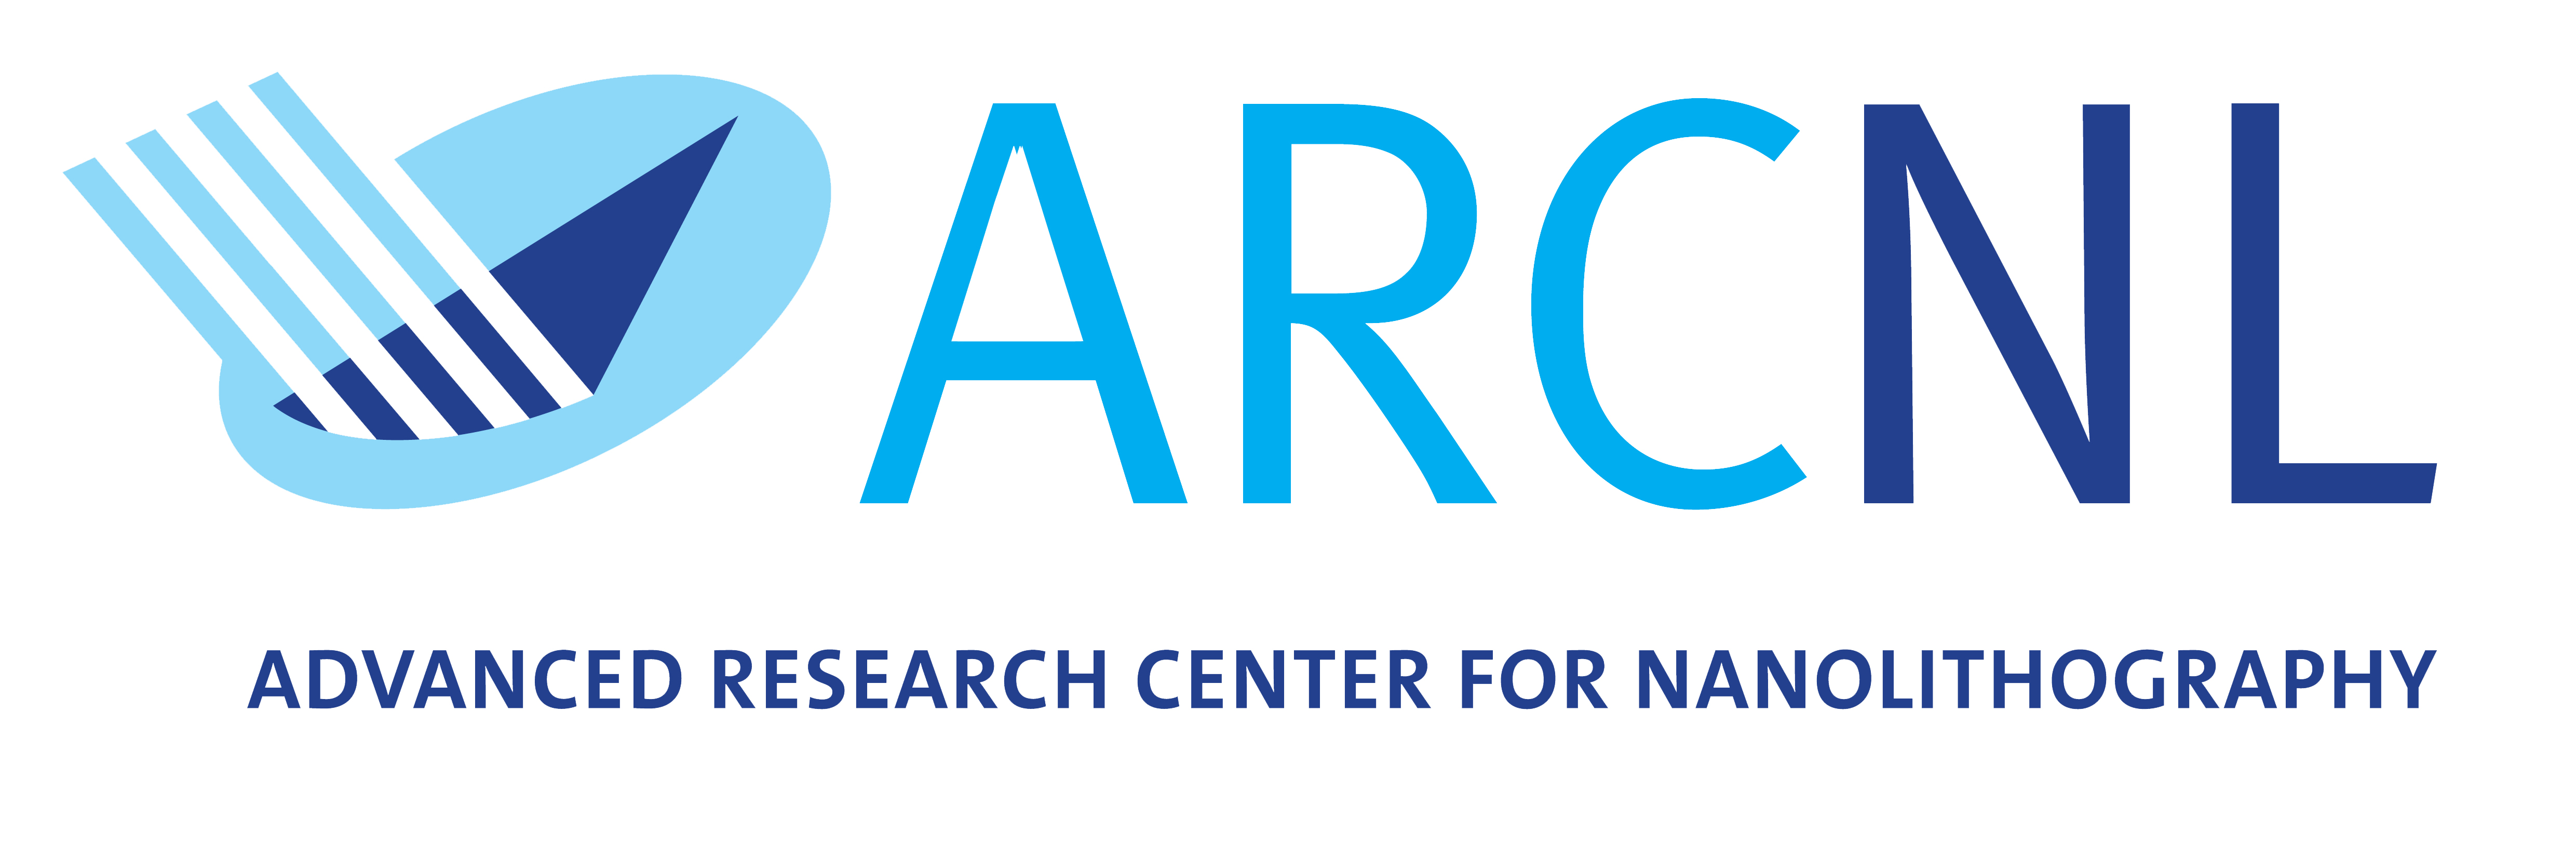 ARCNL's logo